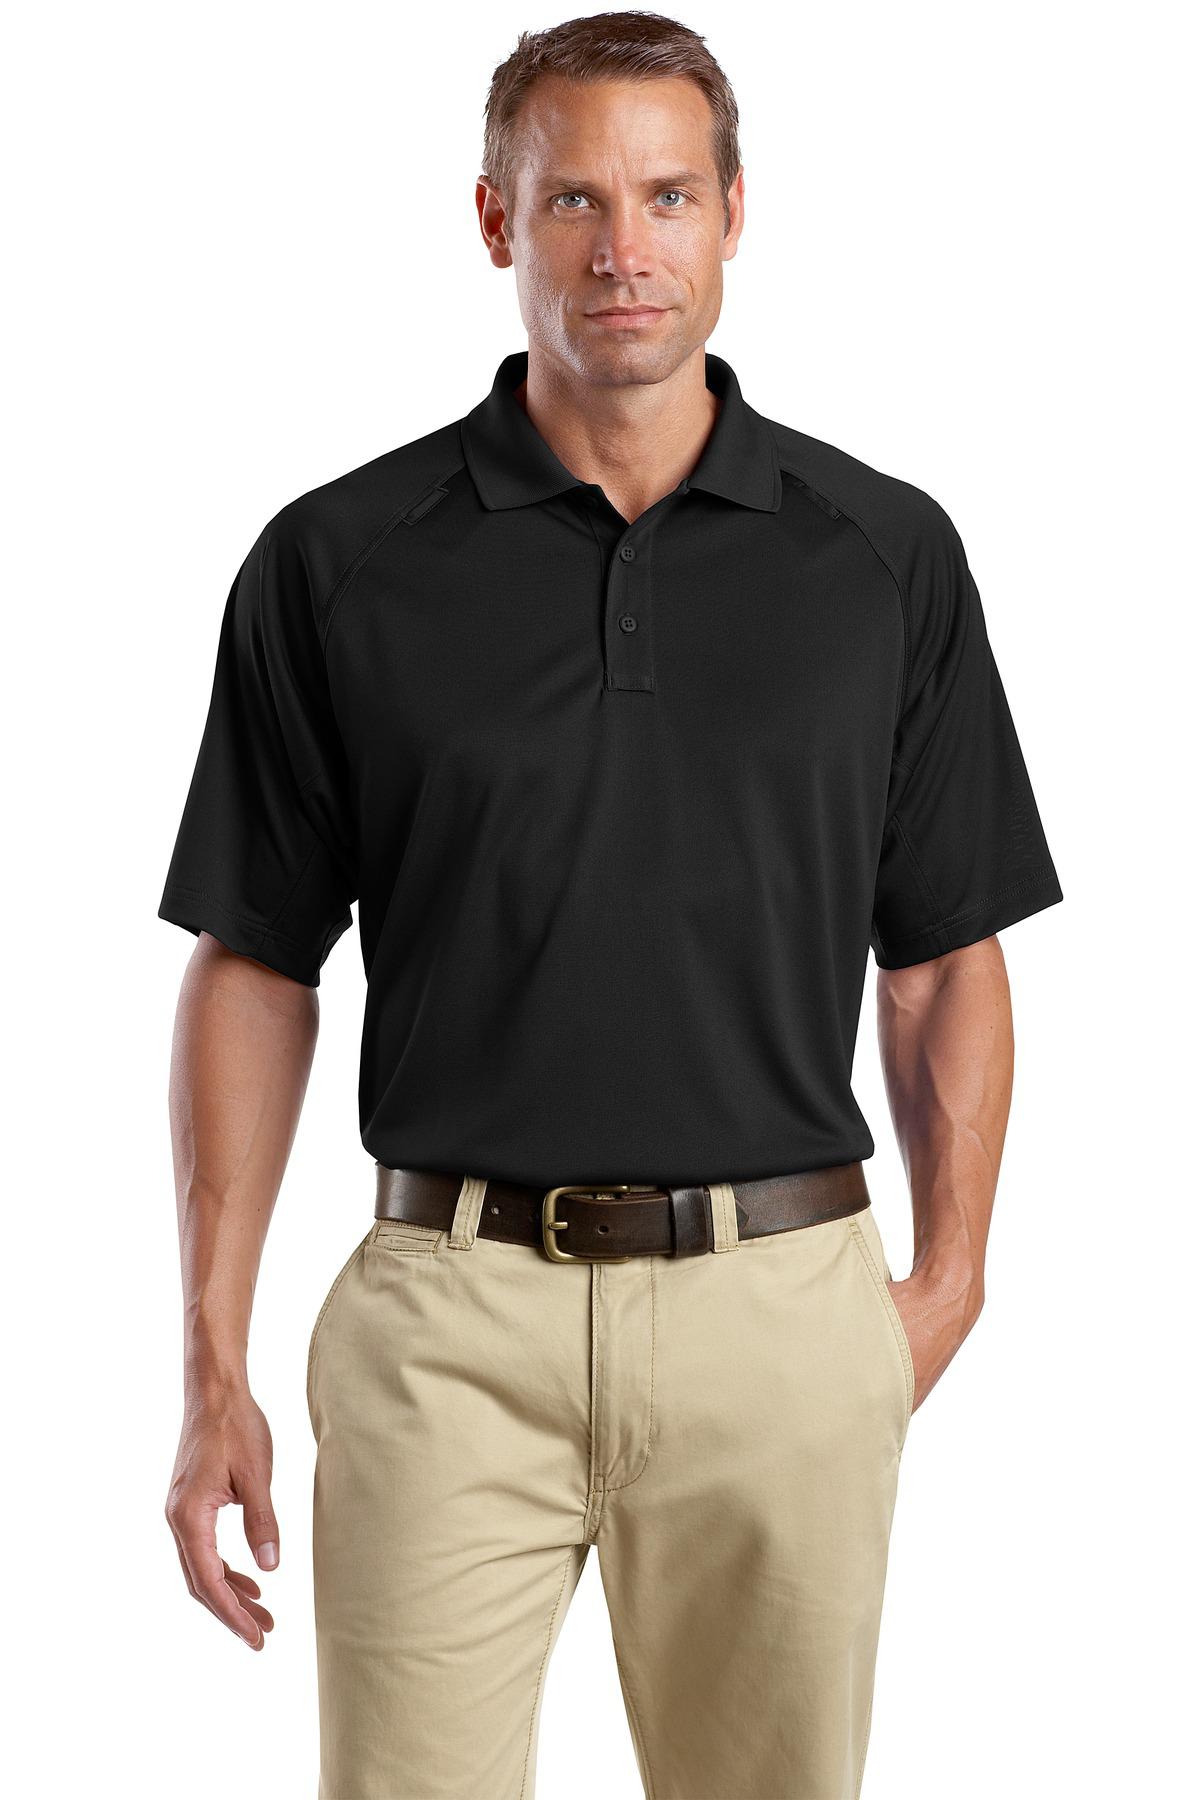 CornerStone CS410 Select Snag-Proof Tactical Polo - Shirtmax